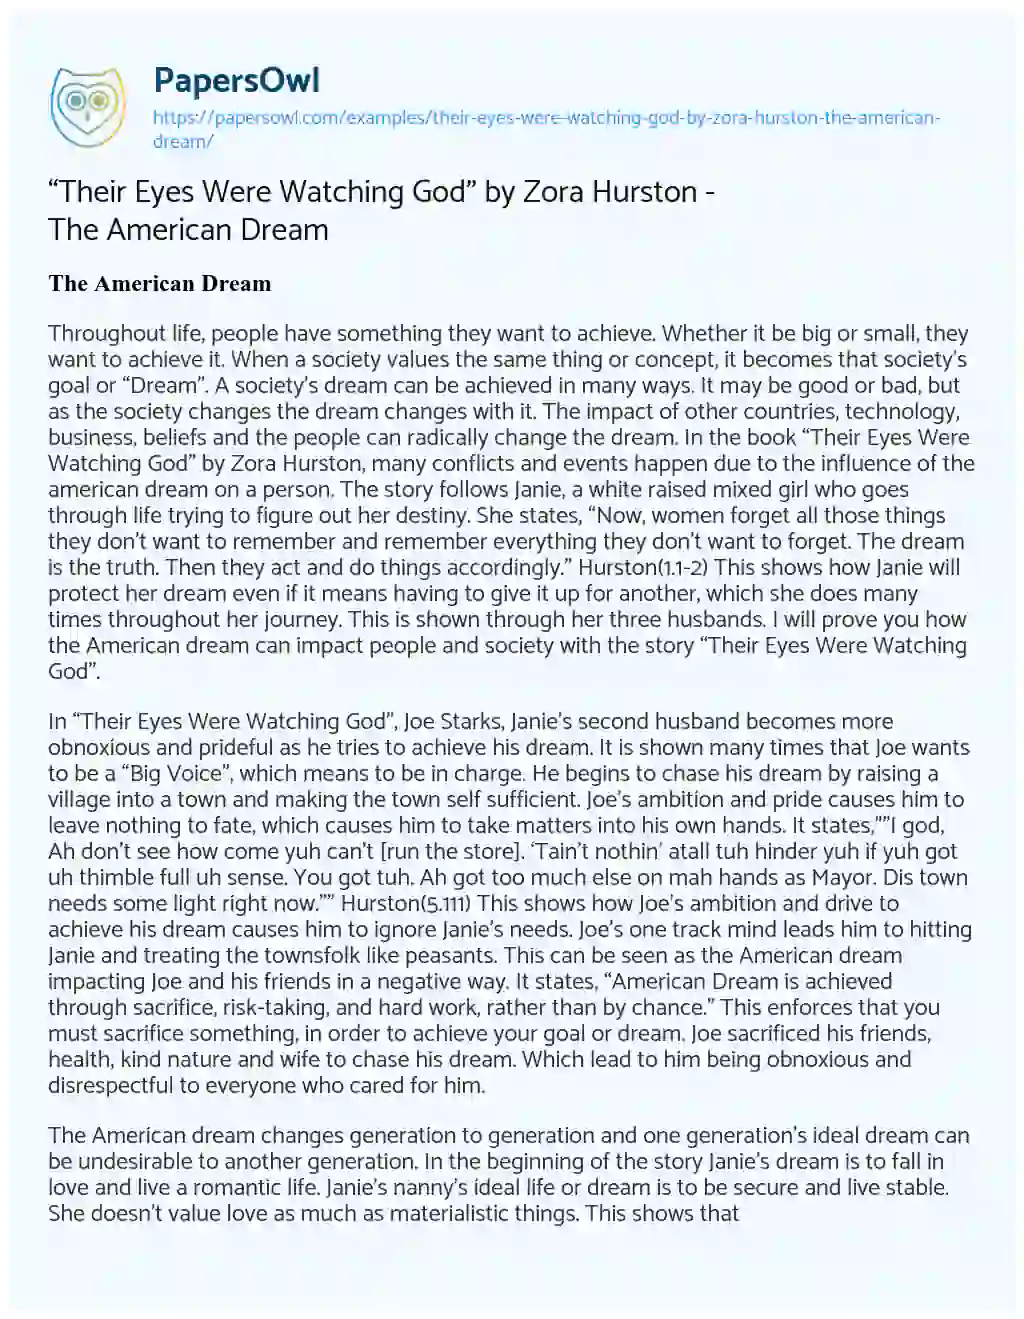 “Their Eyes were Watching God” by Zora Hurston – the American Dream essay